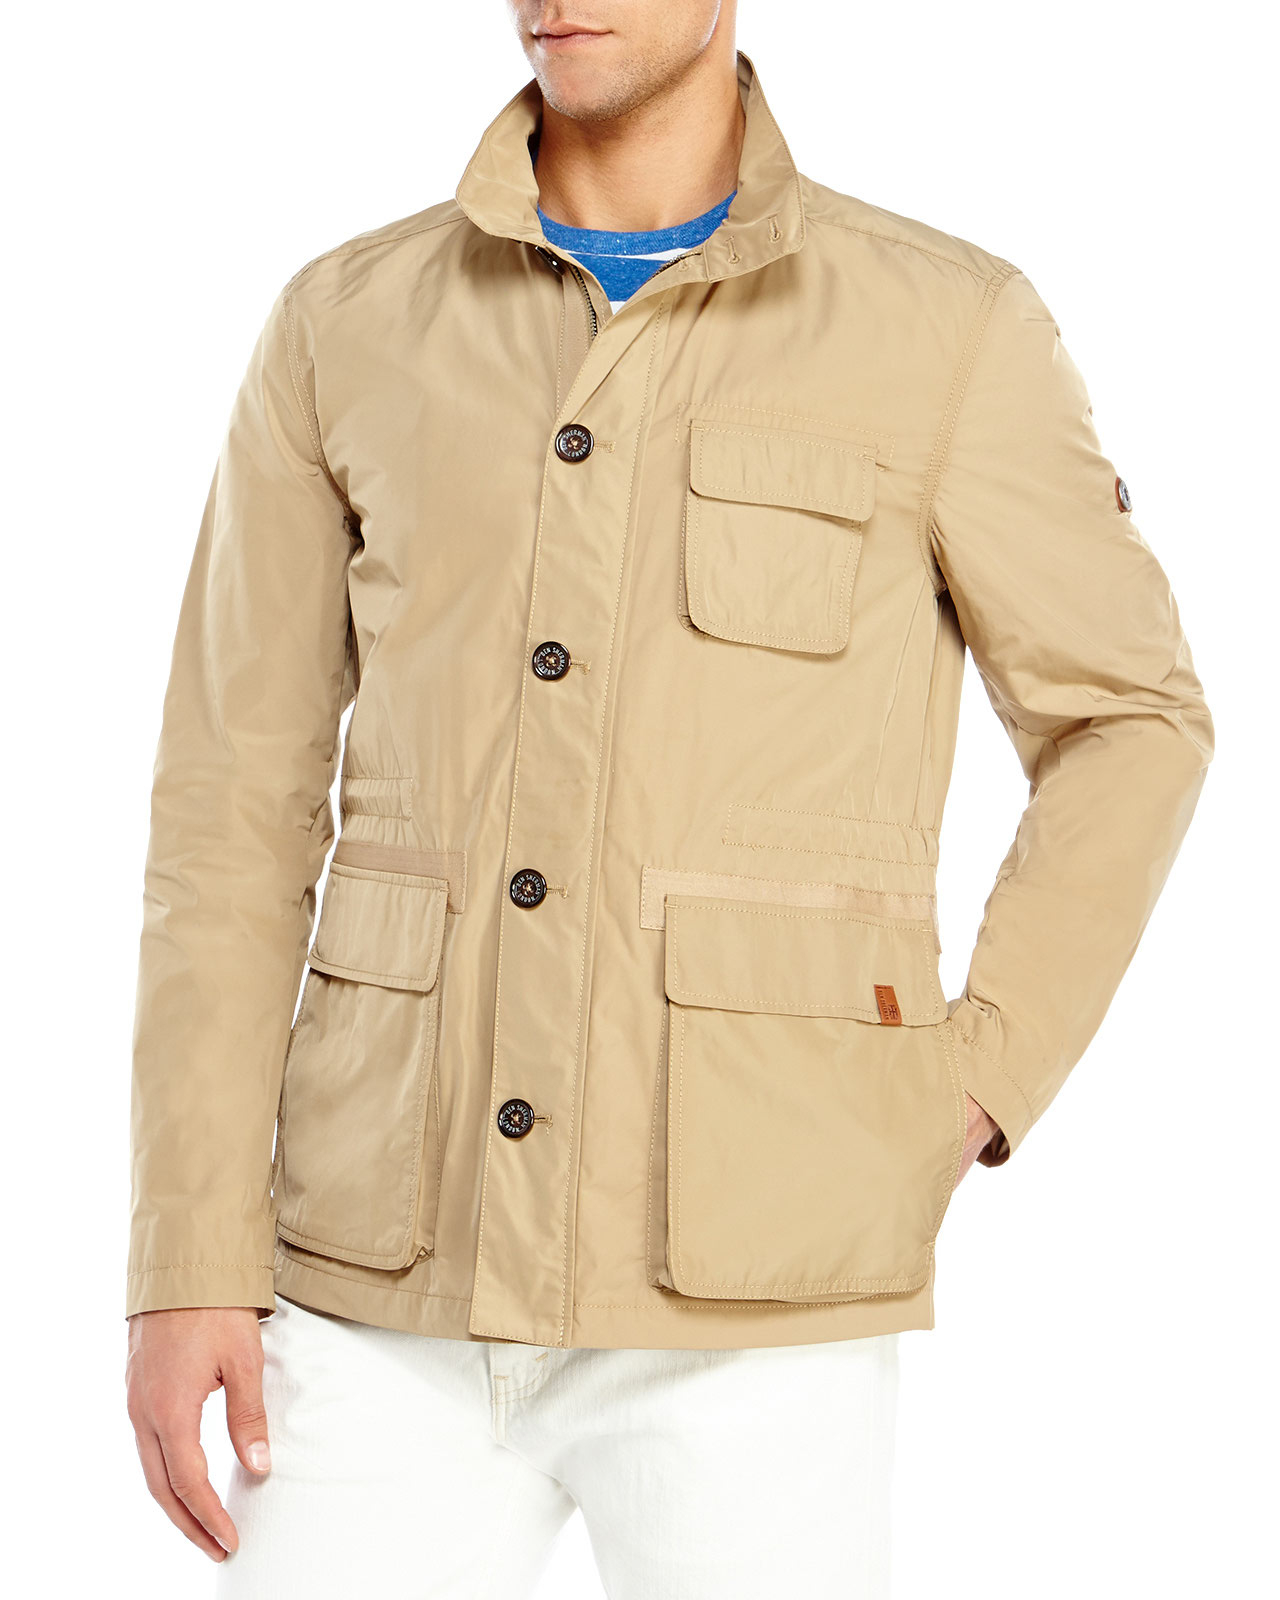 Lyst - Ben sherman Khaki Field Jacket in Natural for Men